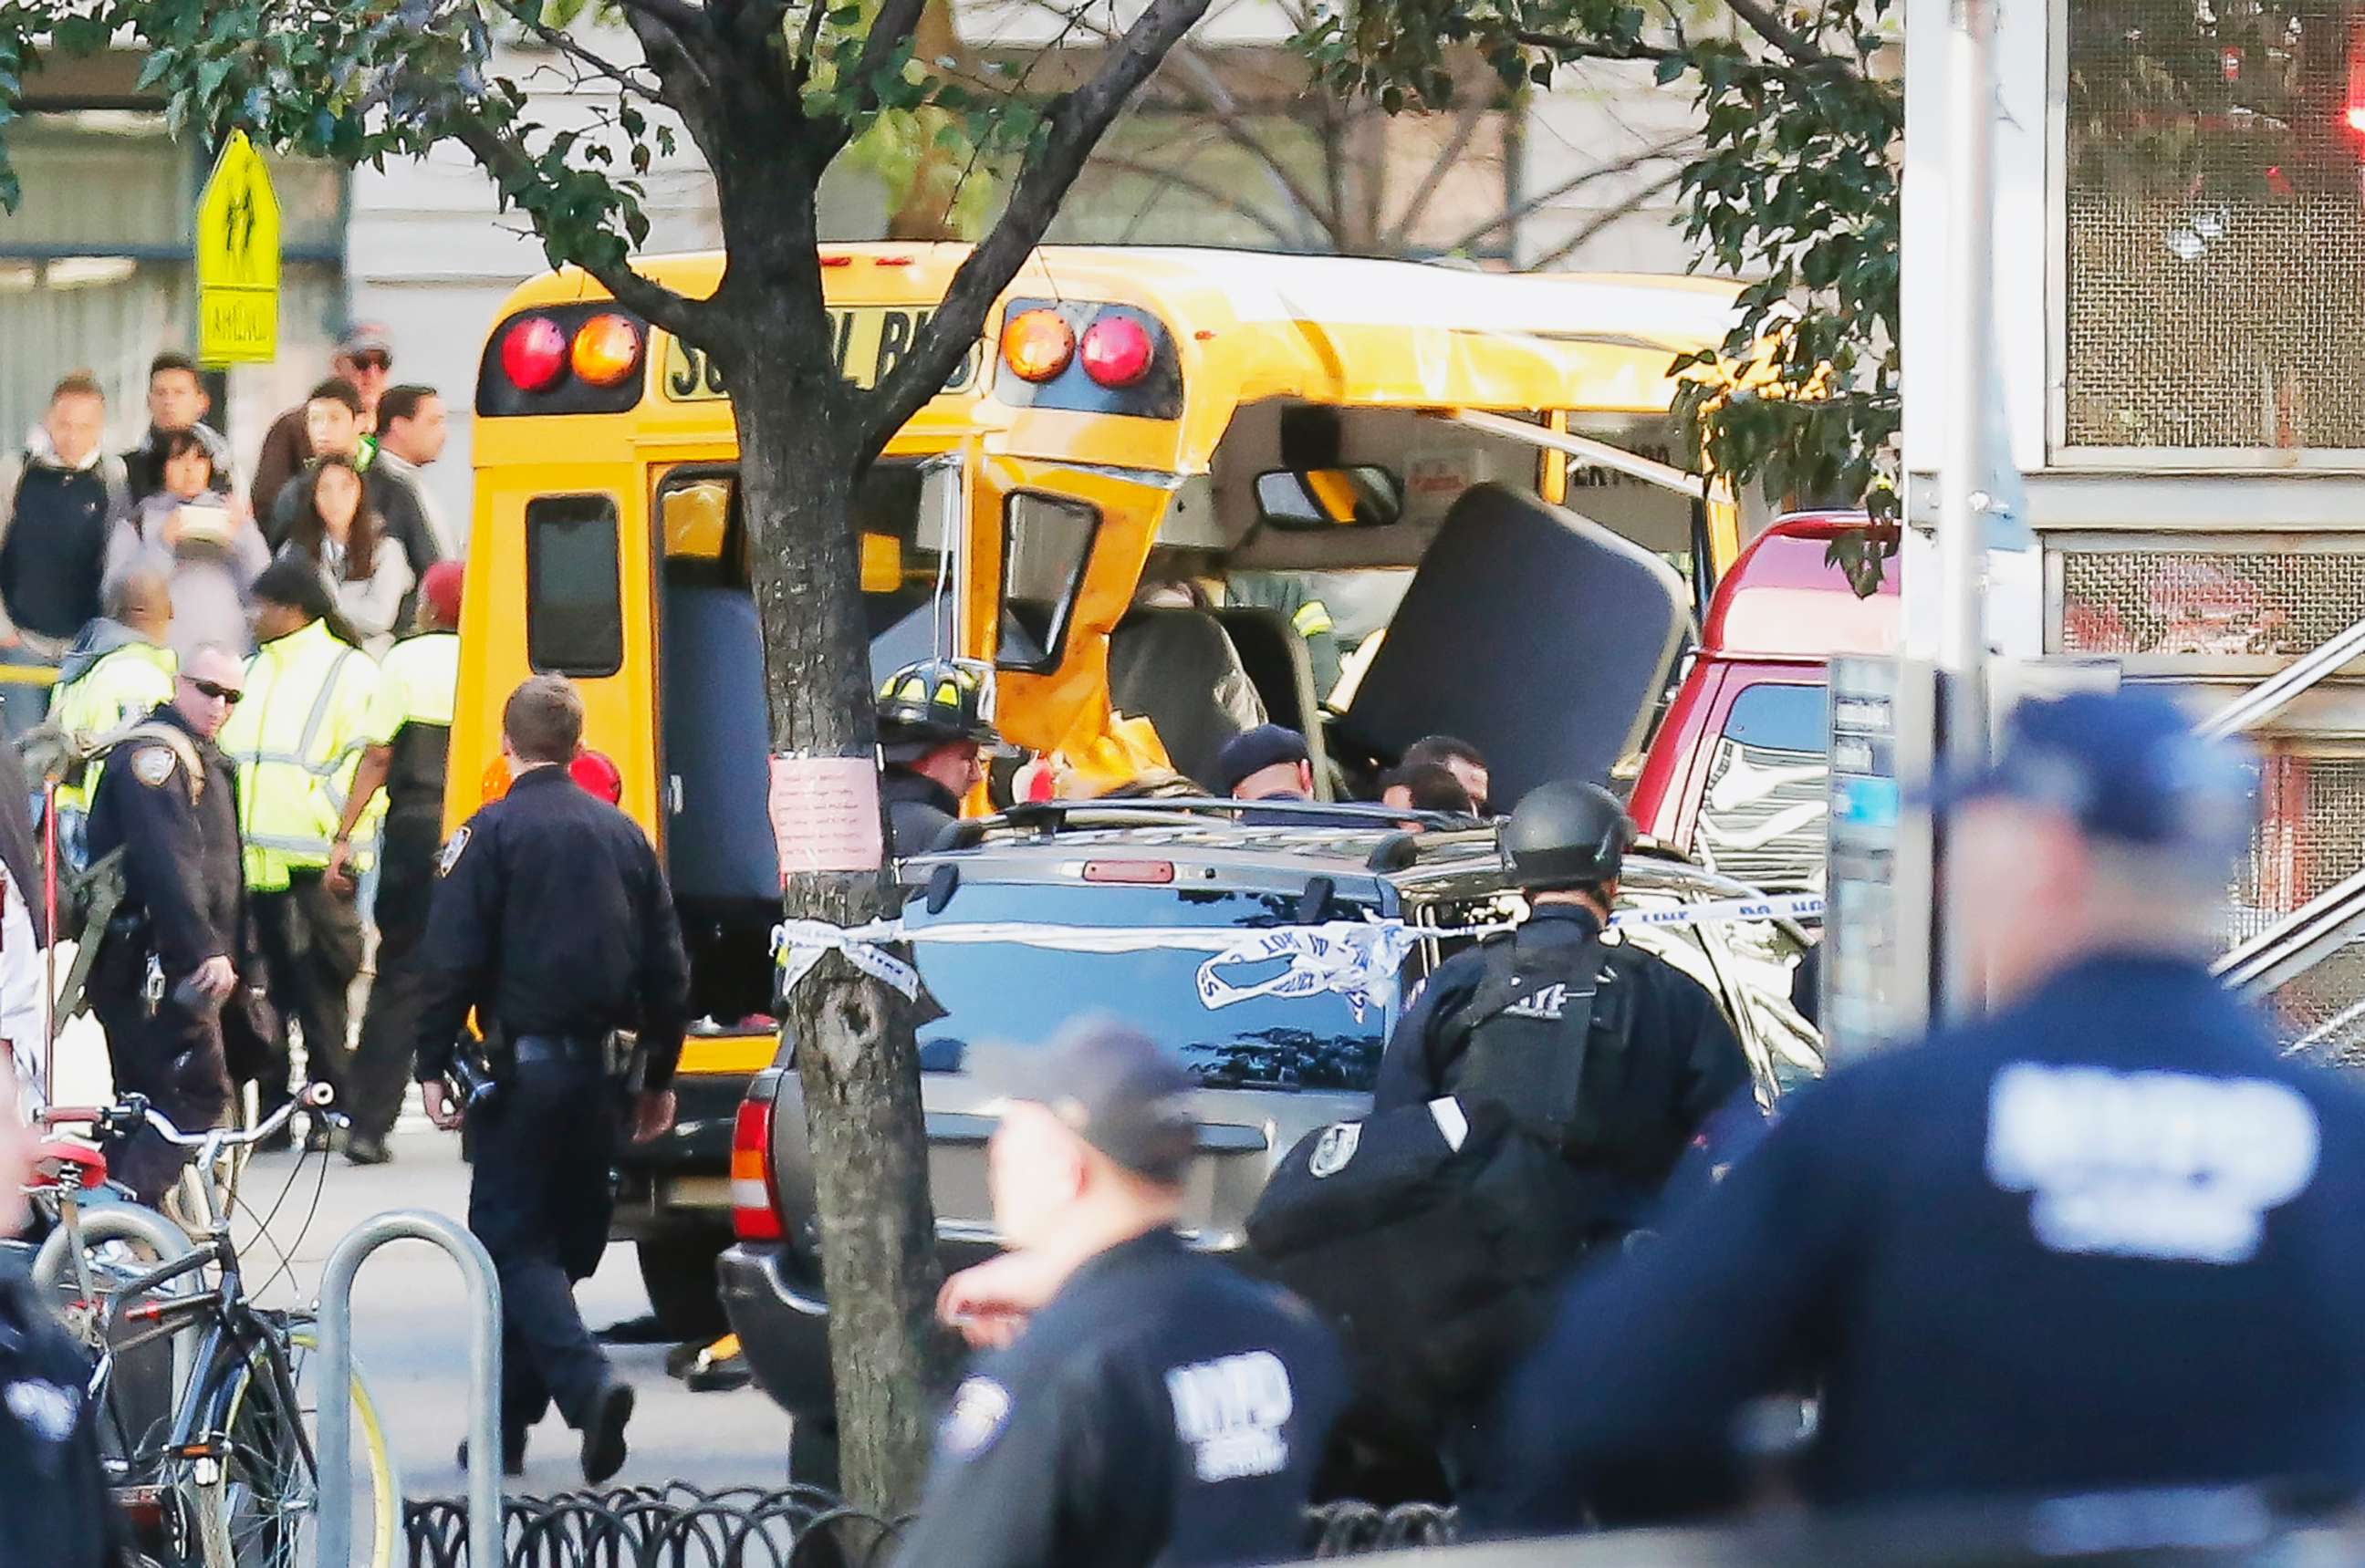 PHOTO: Authorities respond near a damaged school bus, Oct. 31, 2017, in New York.